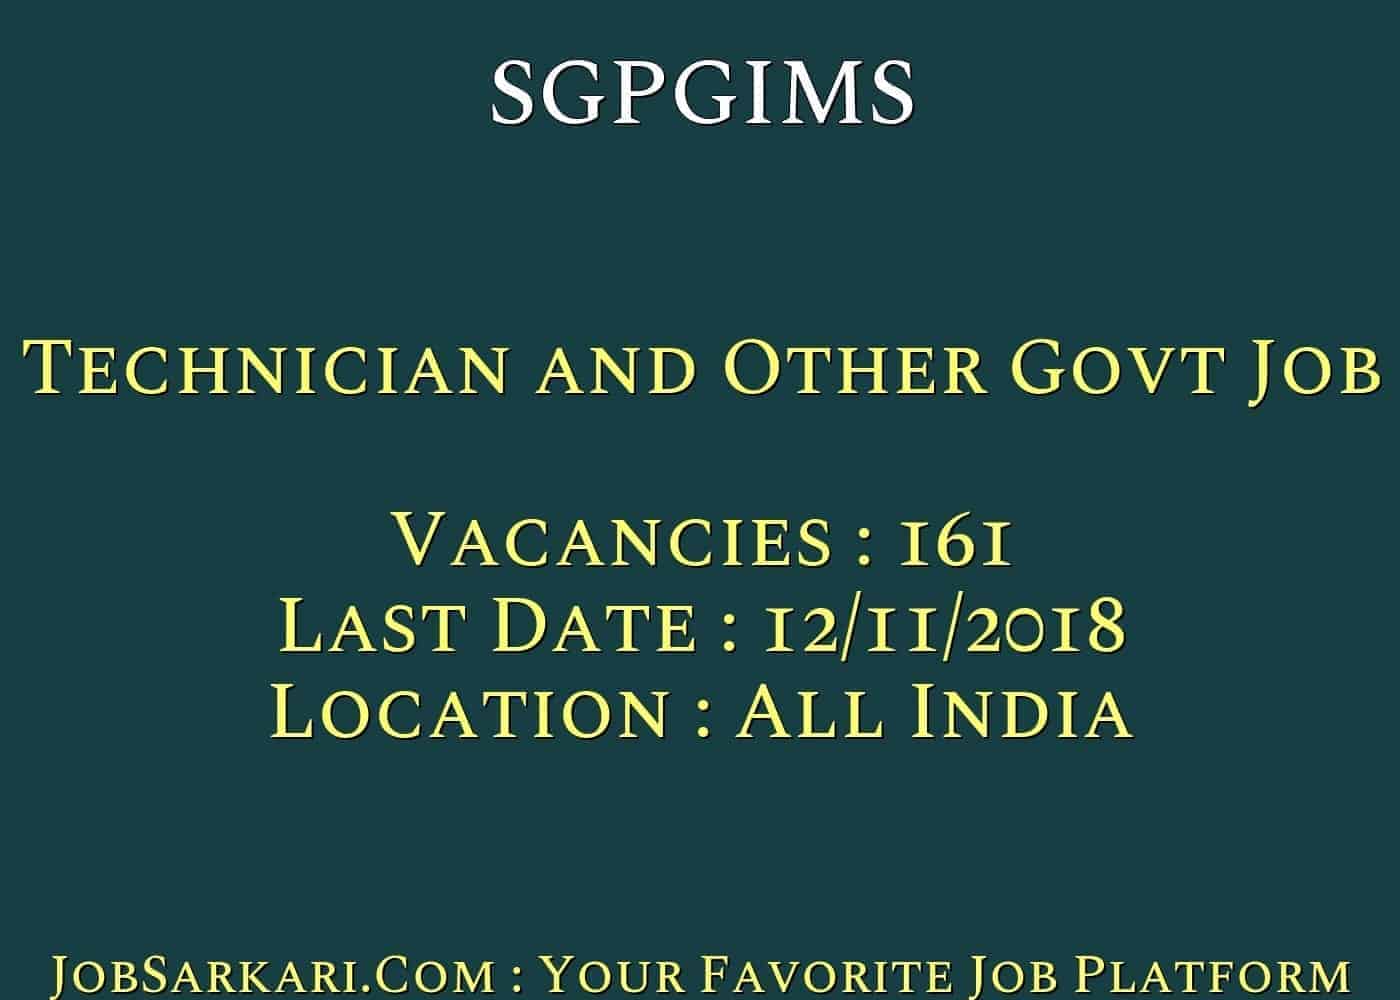 SGPGIMS Recruitment 2018 for Technician and Other Govt Job